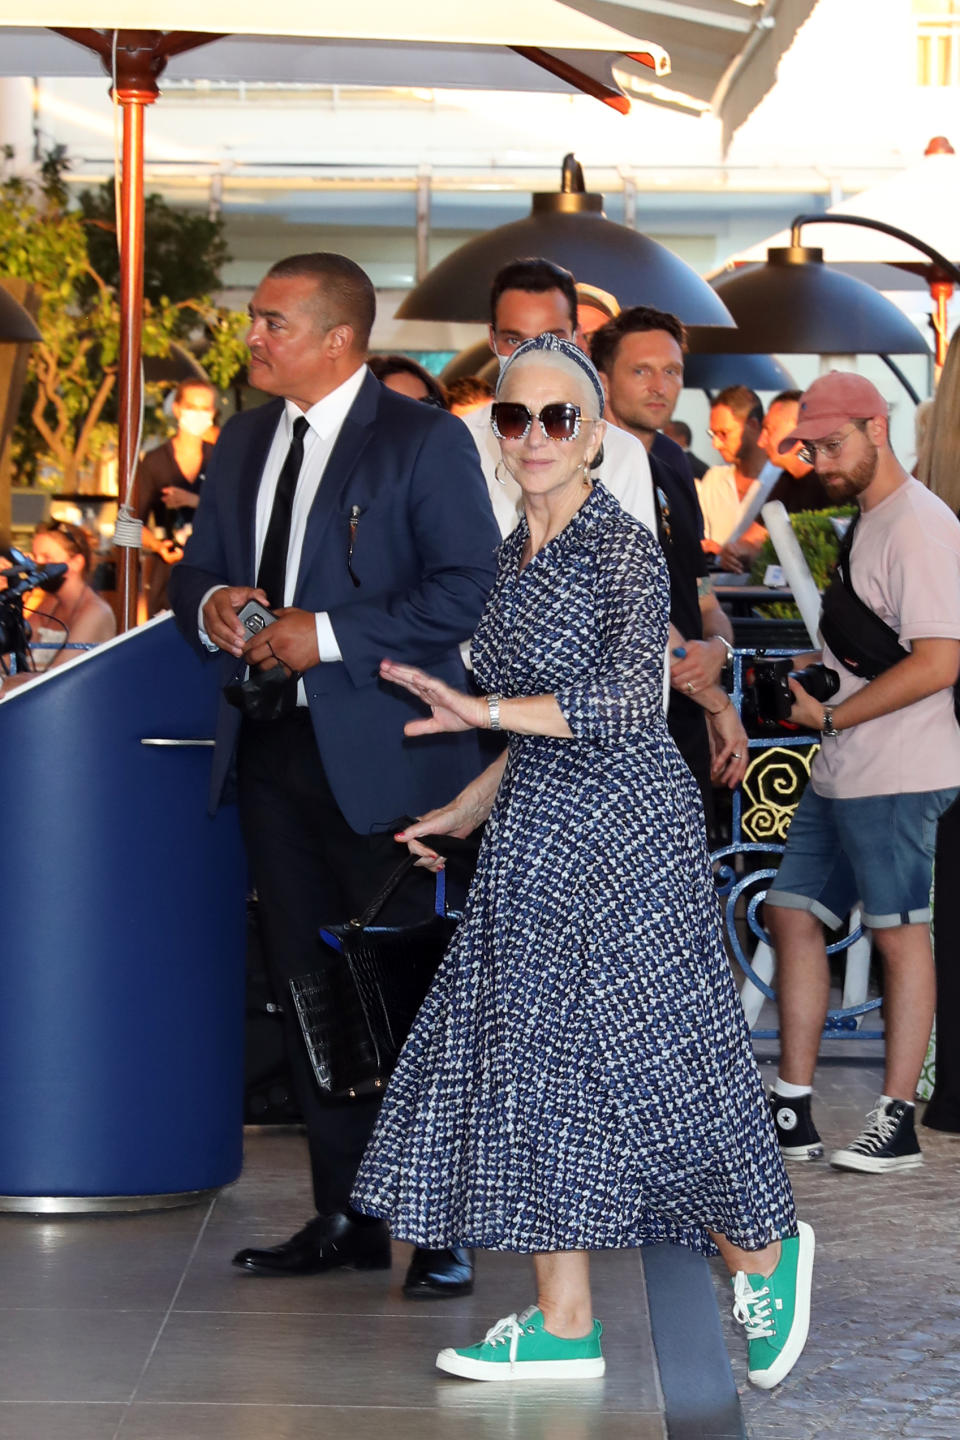 Helen Mirren arrives at the Hotel Martinez during the 2021 Cannes Film Festival. - Credit: MCvitanovic / SplashNews.com